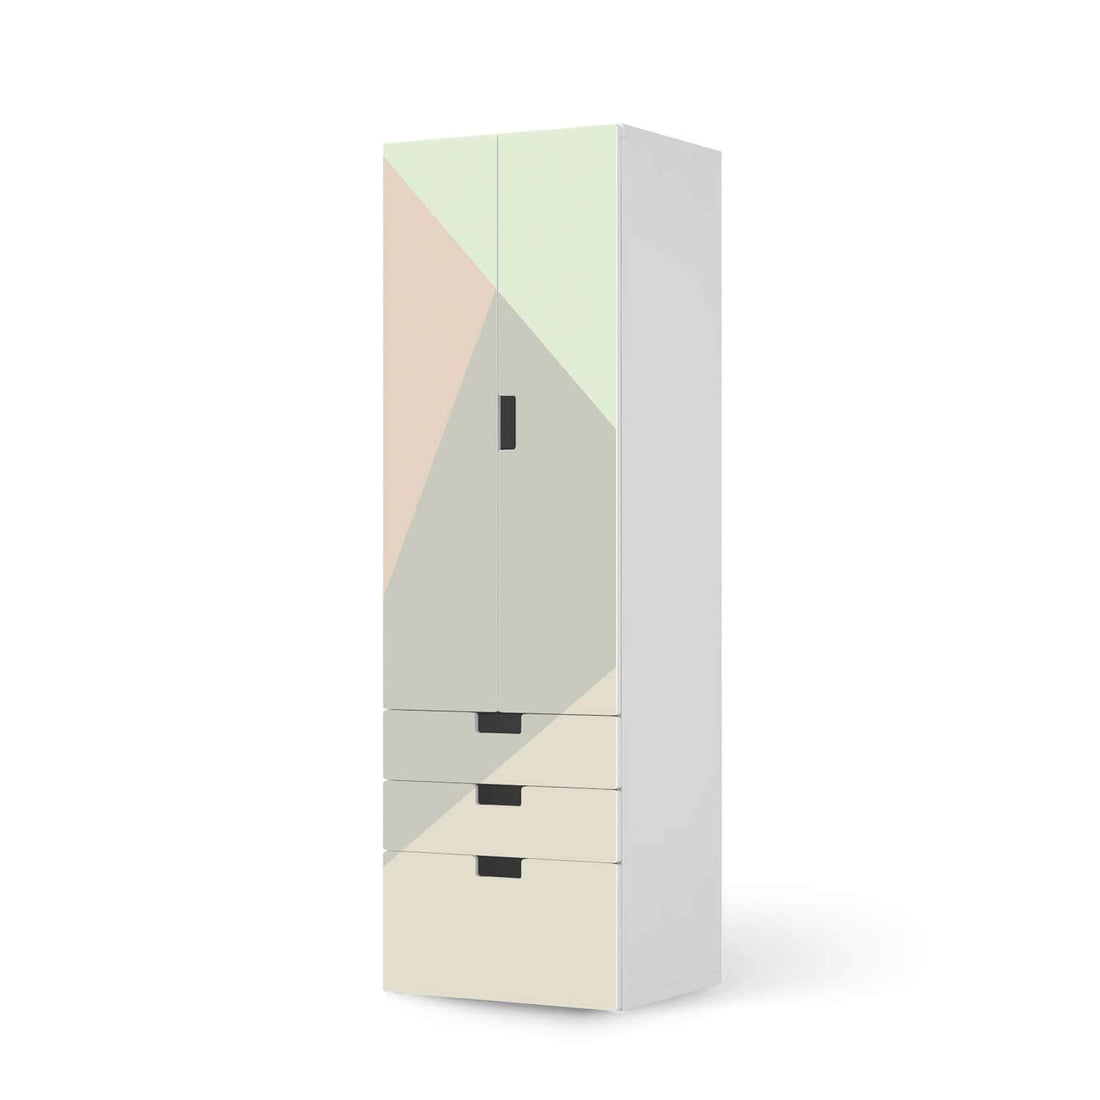 Klebefolie Pastell Geometrik - IKEA Stuva kombiniert - 3 Schubladen und 2 große Türen (Kombination 1)  - weiss